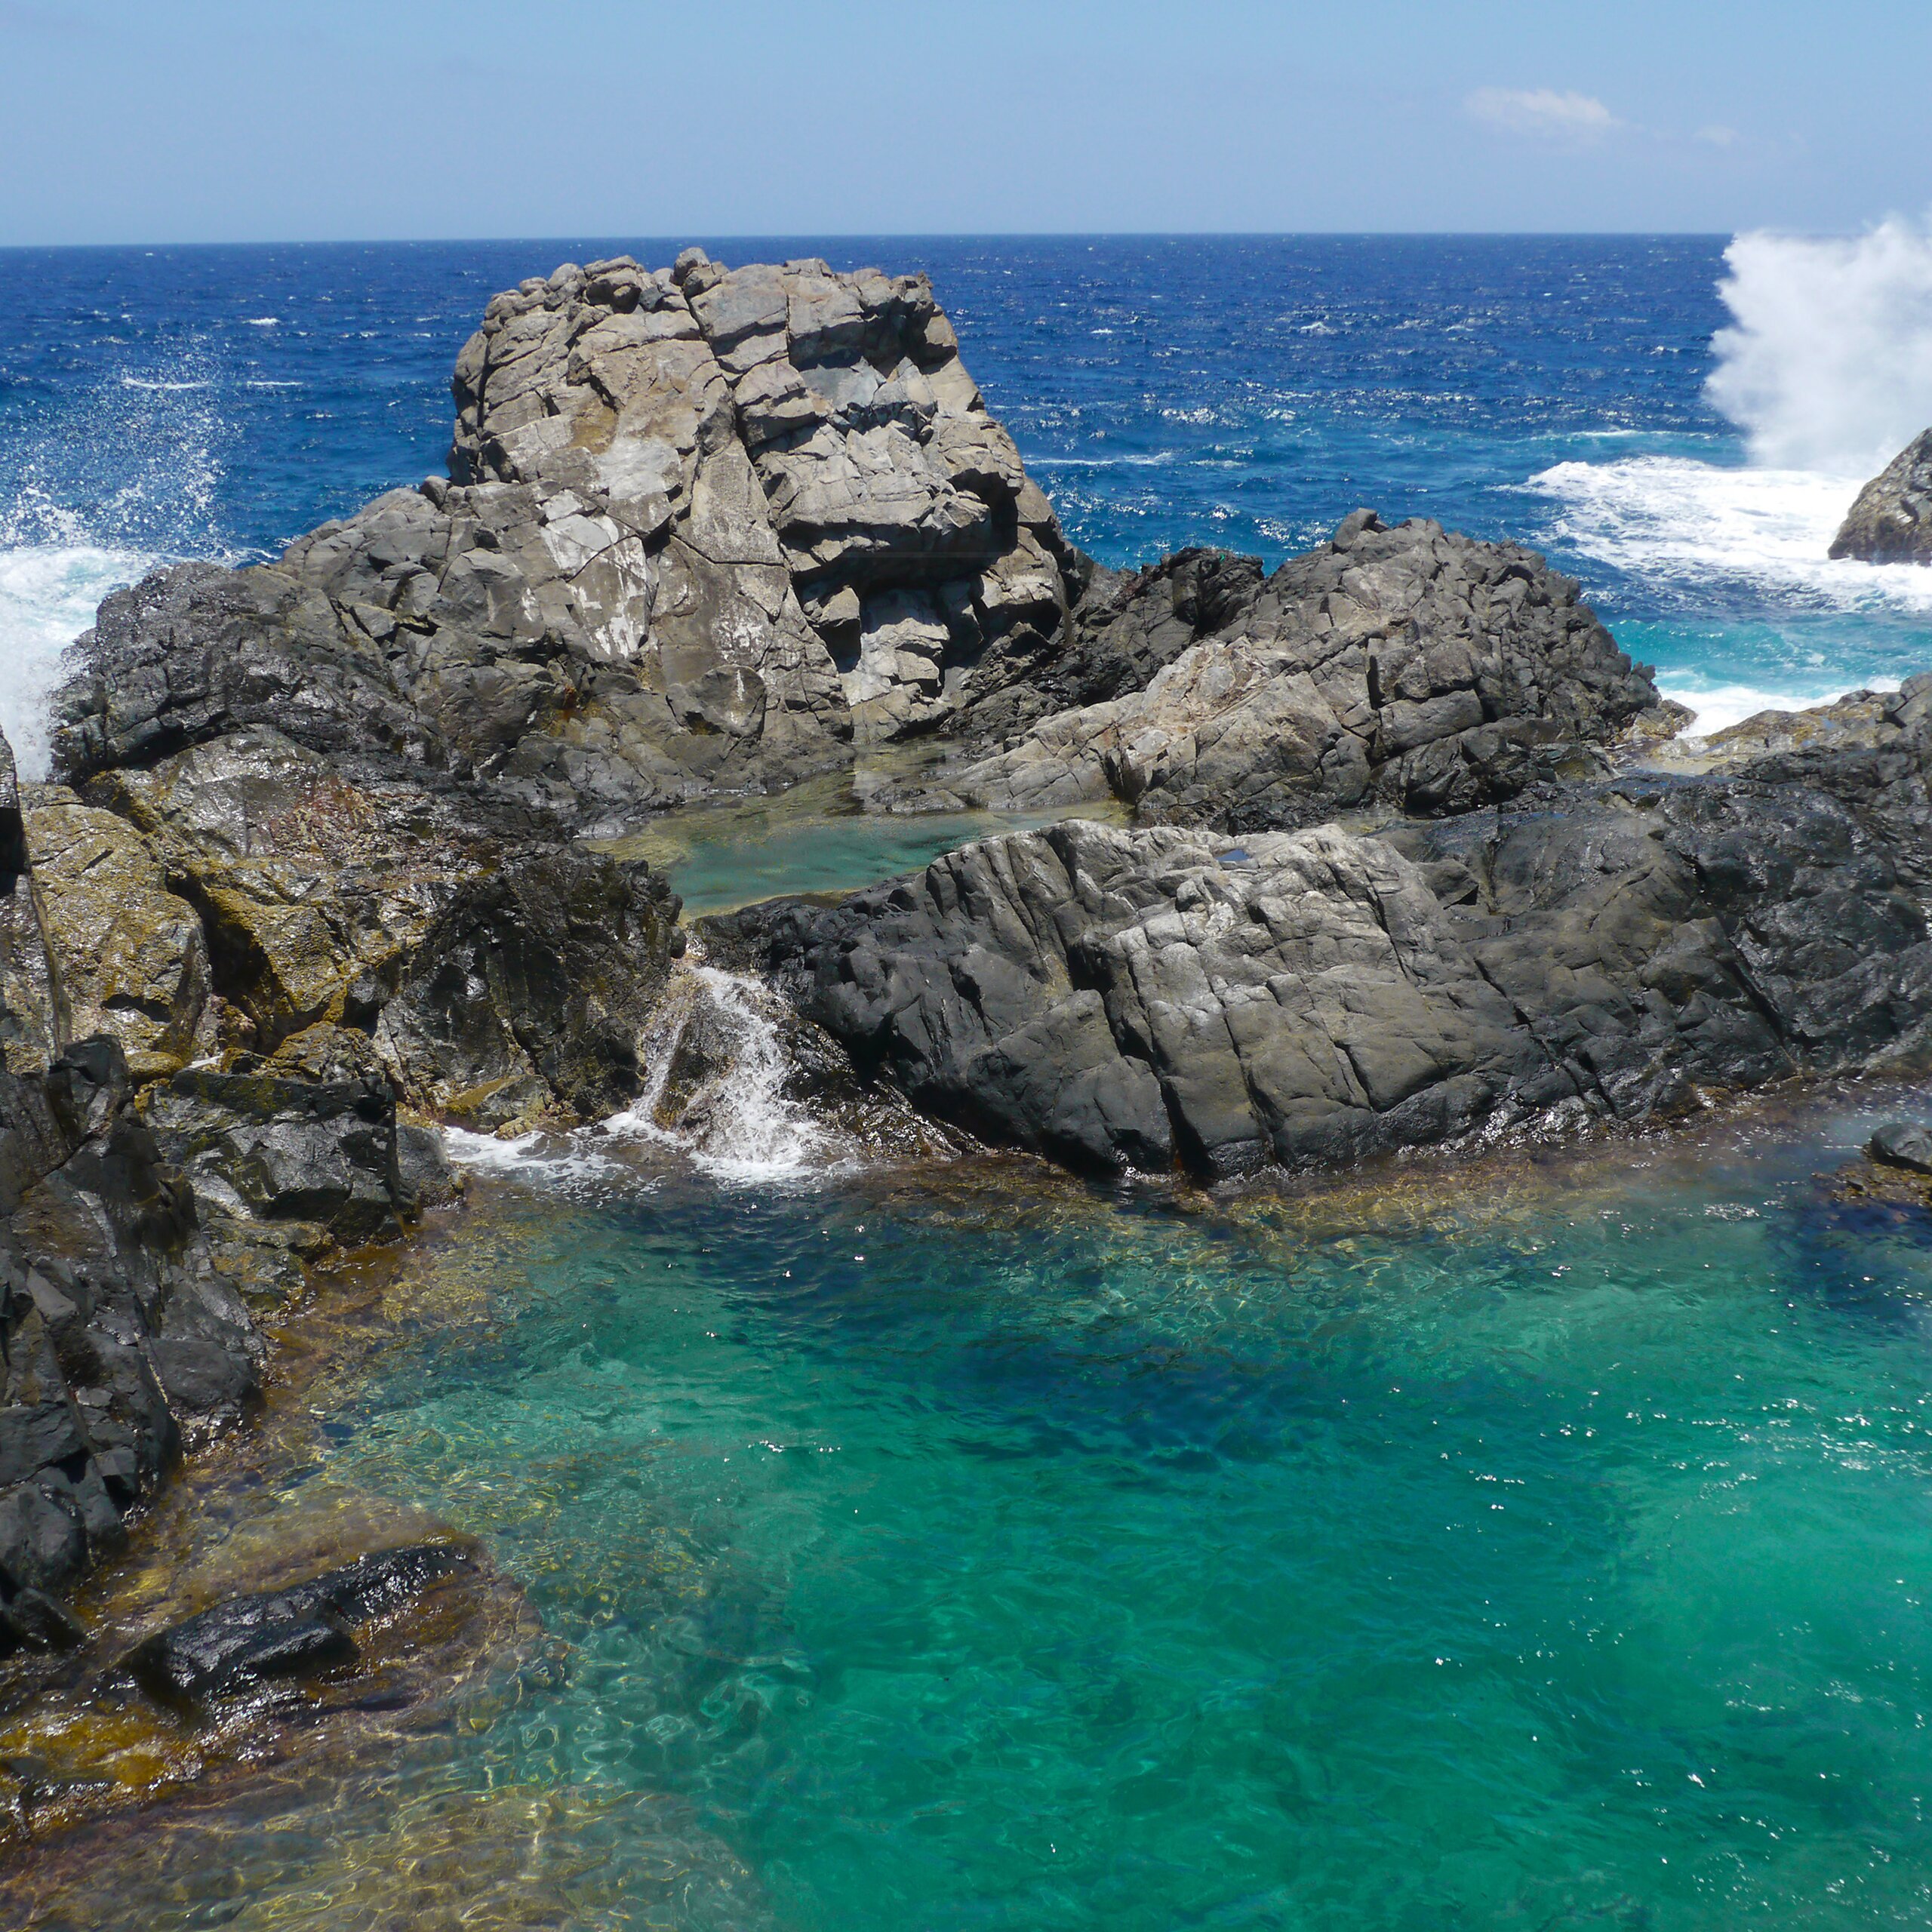 The Natural Pool "Conchi" - Aruba's Most Beautiful Destinations